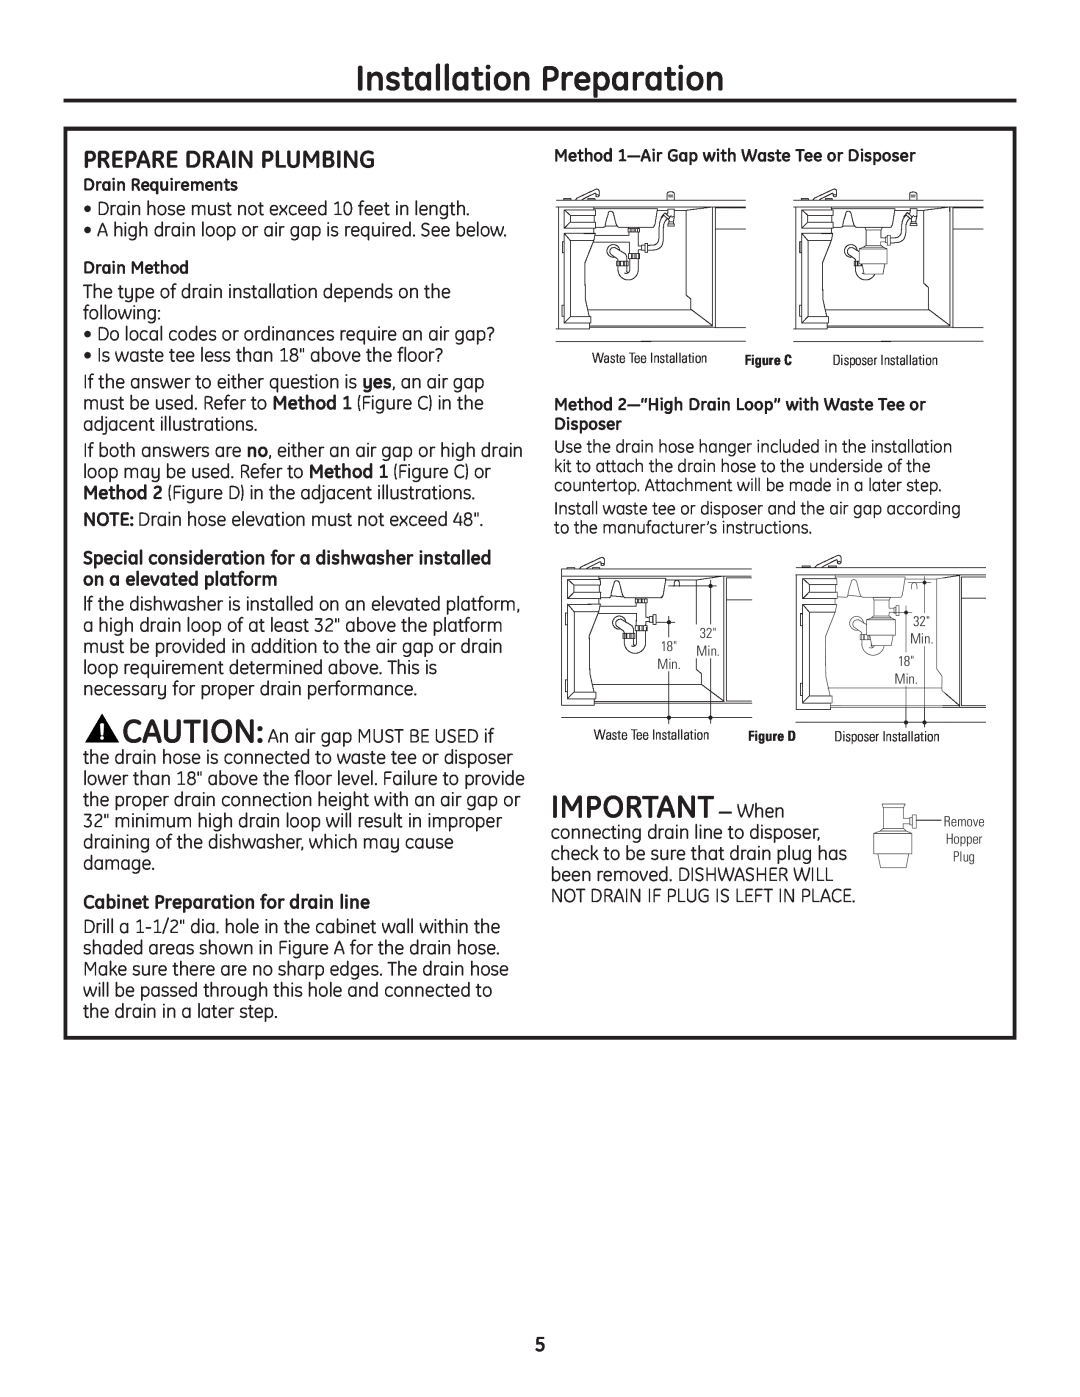 GE Monogram Built-In Dishwashers IMPORTANT- When, Prepare Drain Plumbing, Cabinet Preparation for drain line 